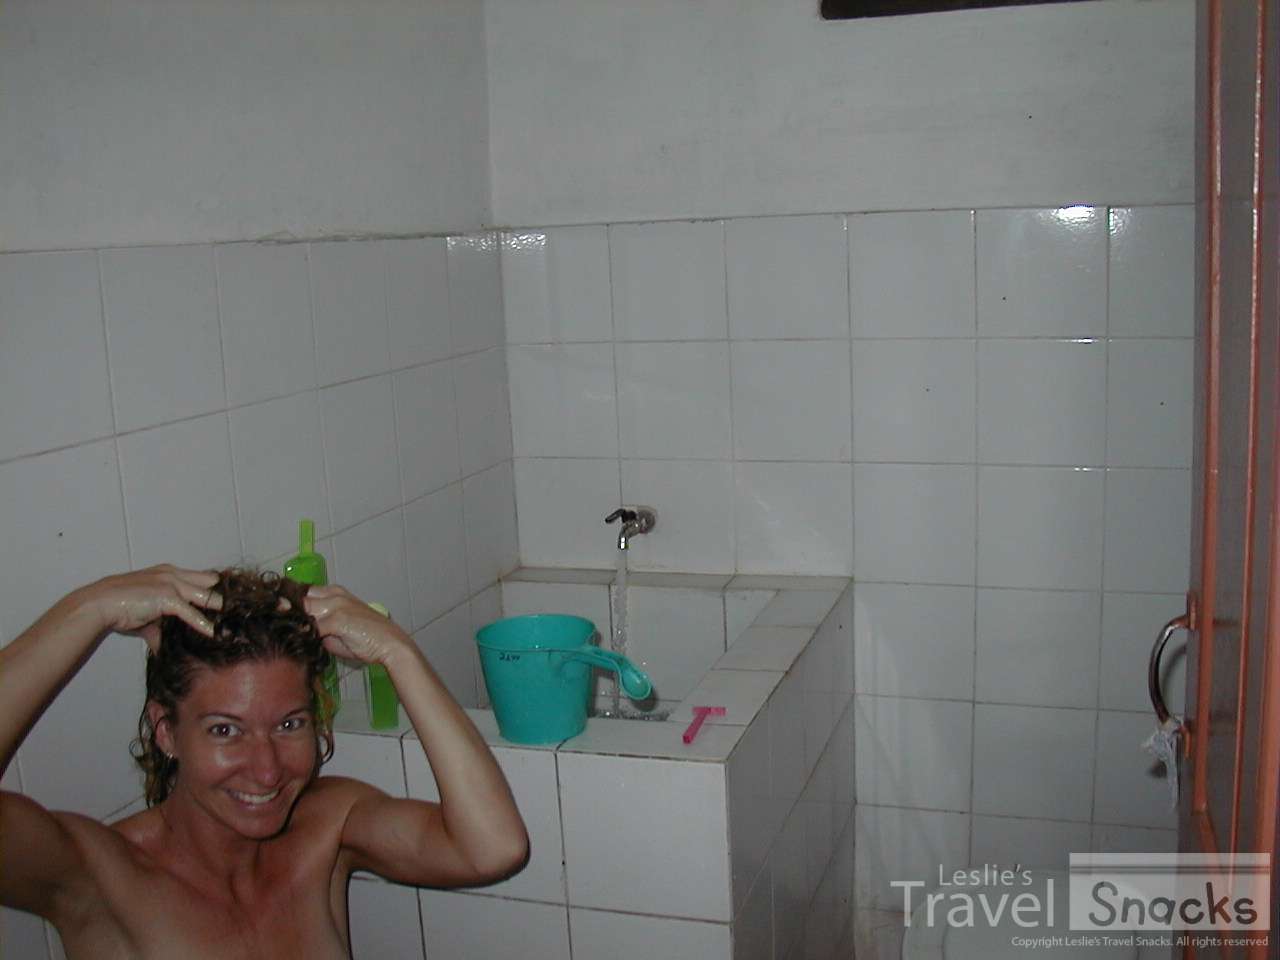 That basin plus the ladle = bathing shower.